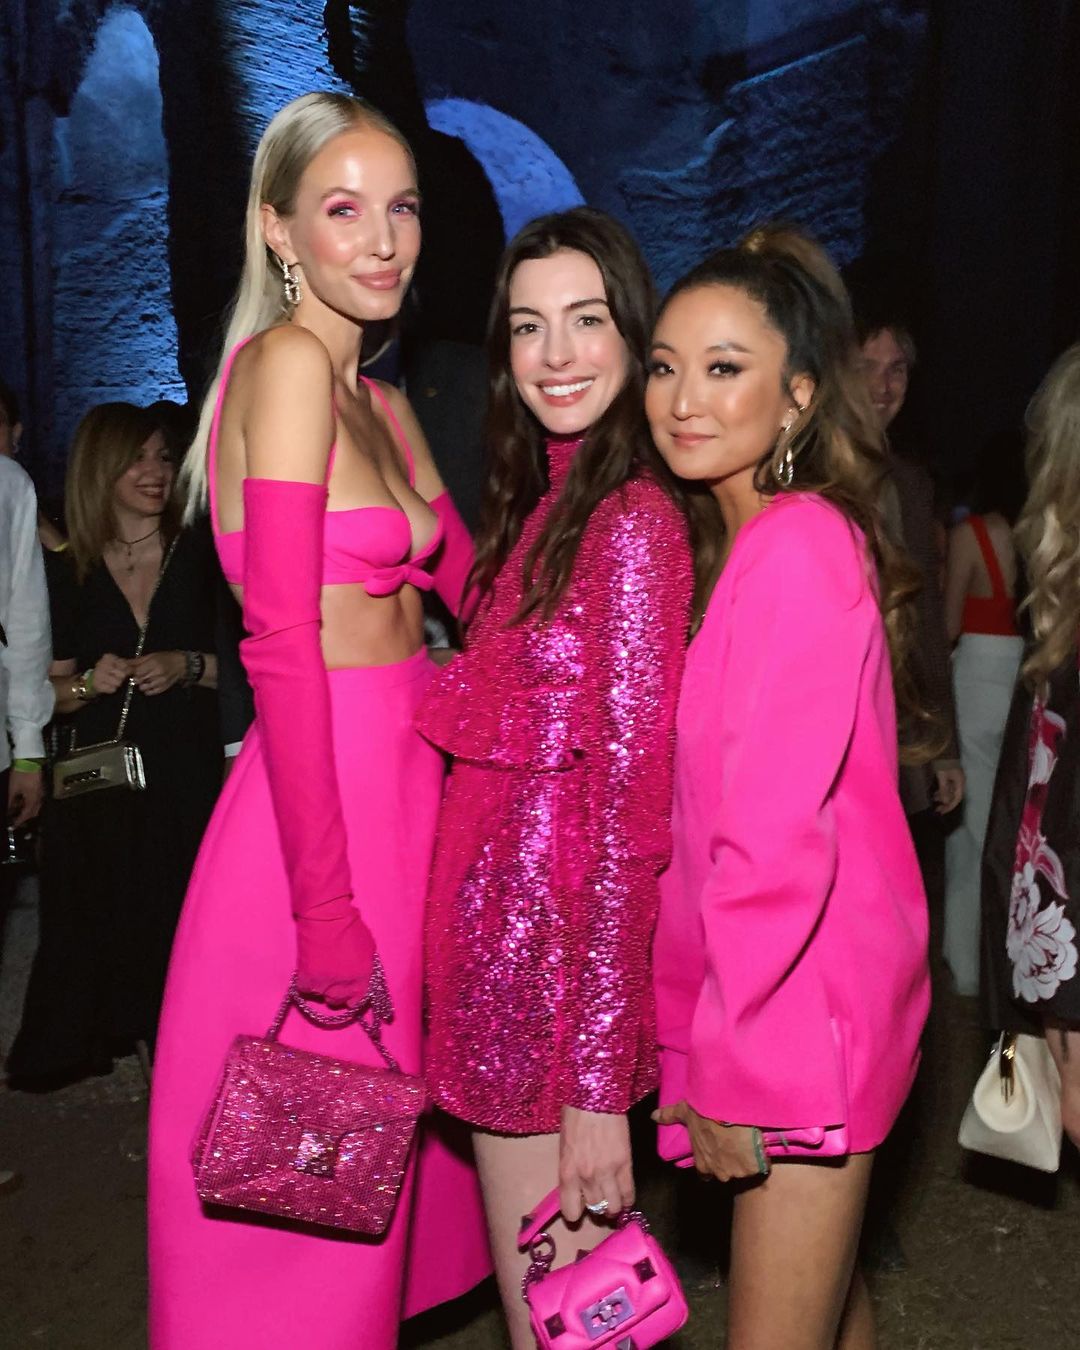 Pink party: Енн Гетевей, Леоні Ханне та Емі Сонг на кутюрному шоу Valentino